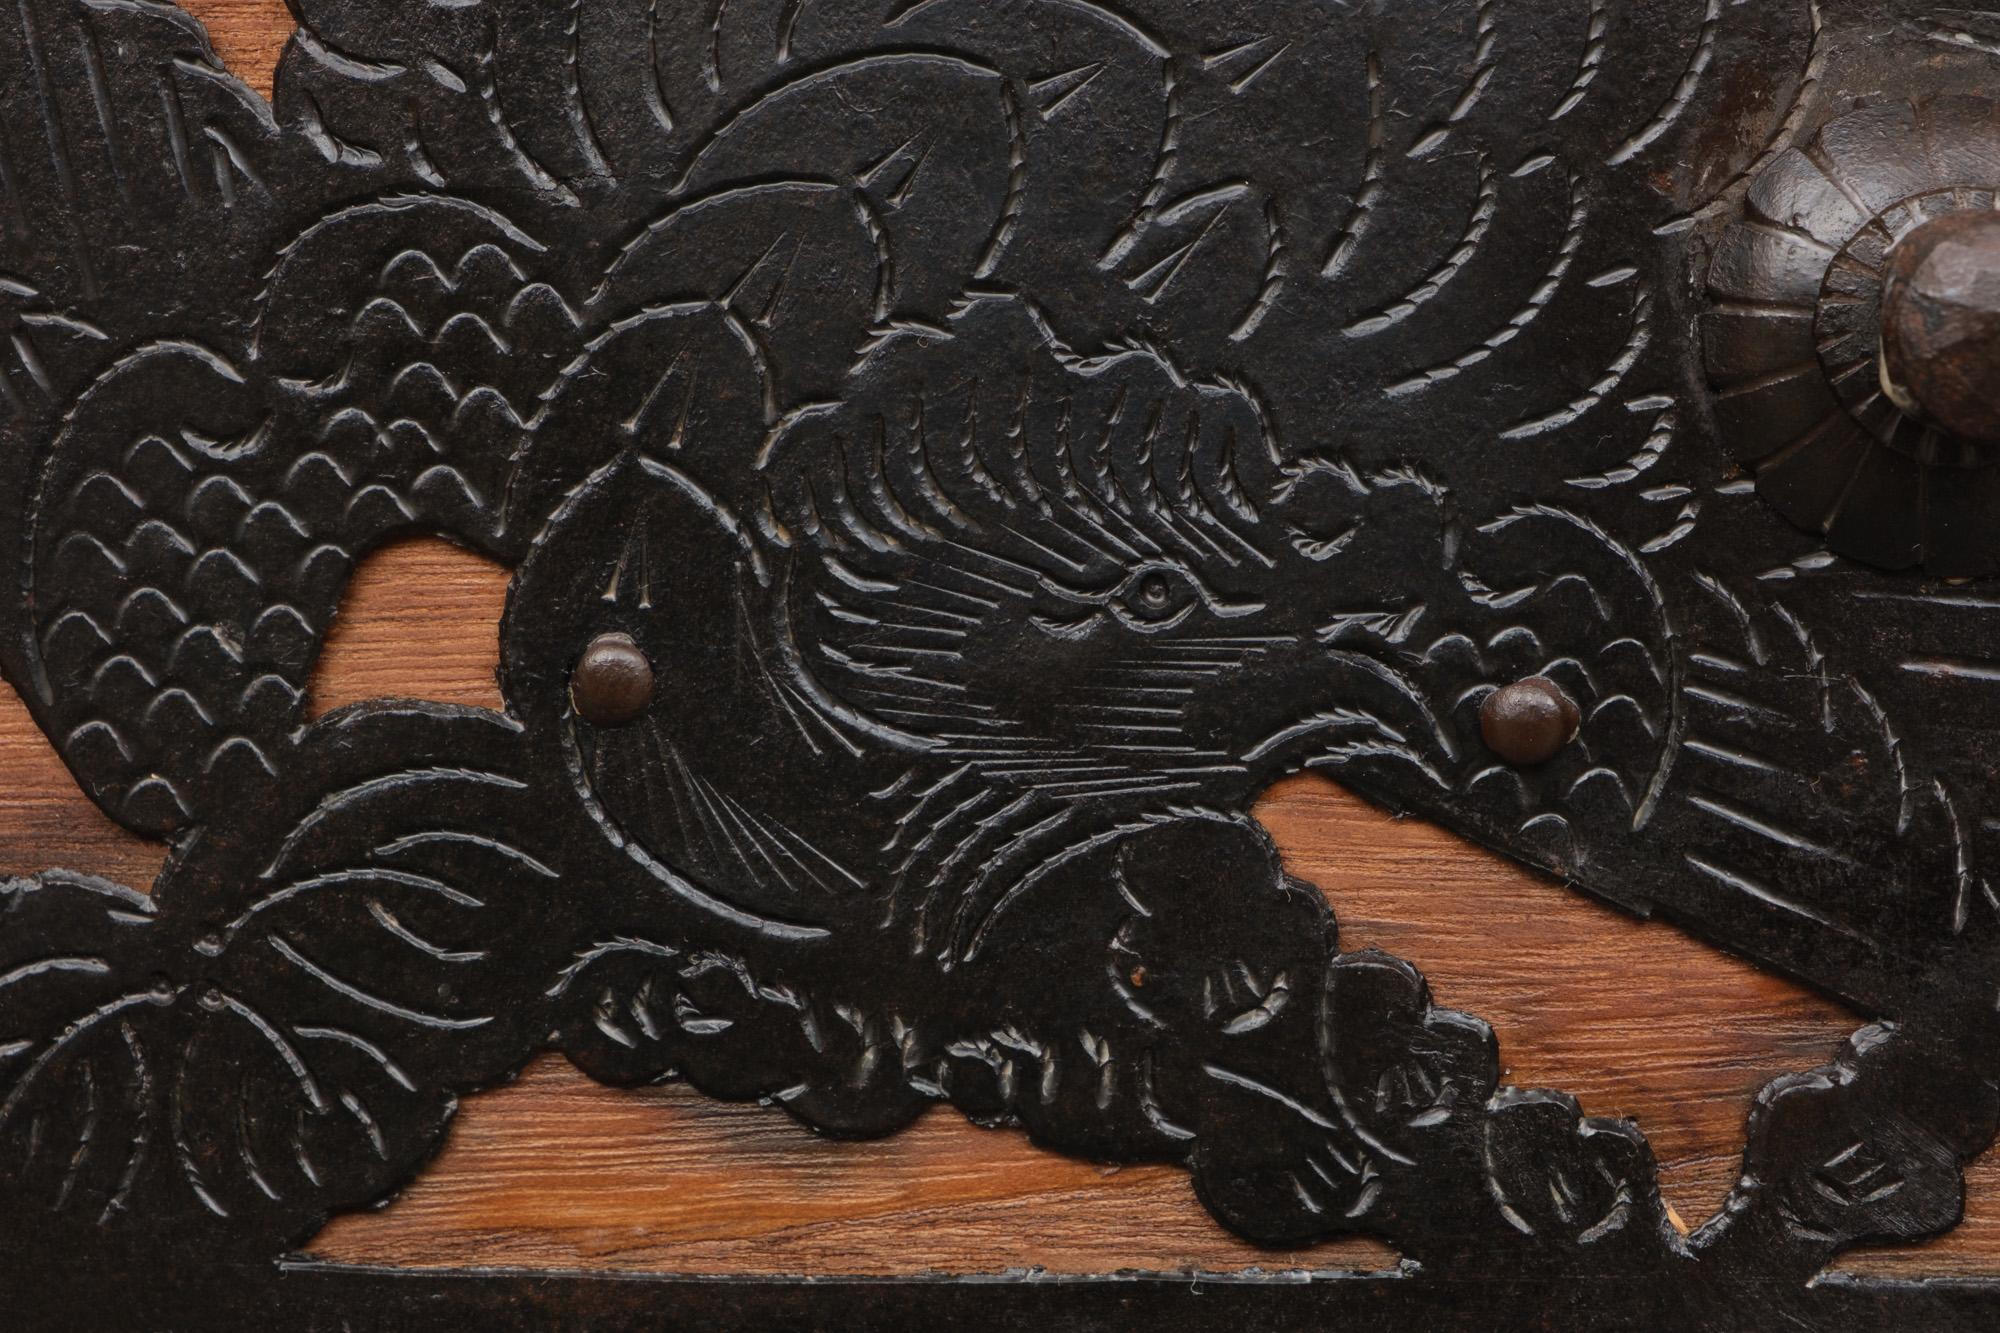 Japanese Sado ishô dansu 衣装箪笥 (cabinet of drawers) with elaborate hardware For Sale 9